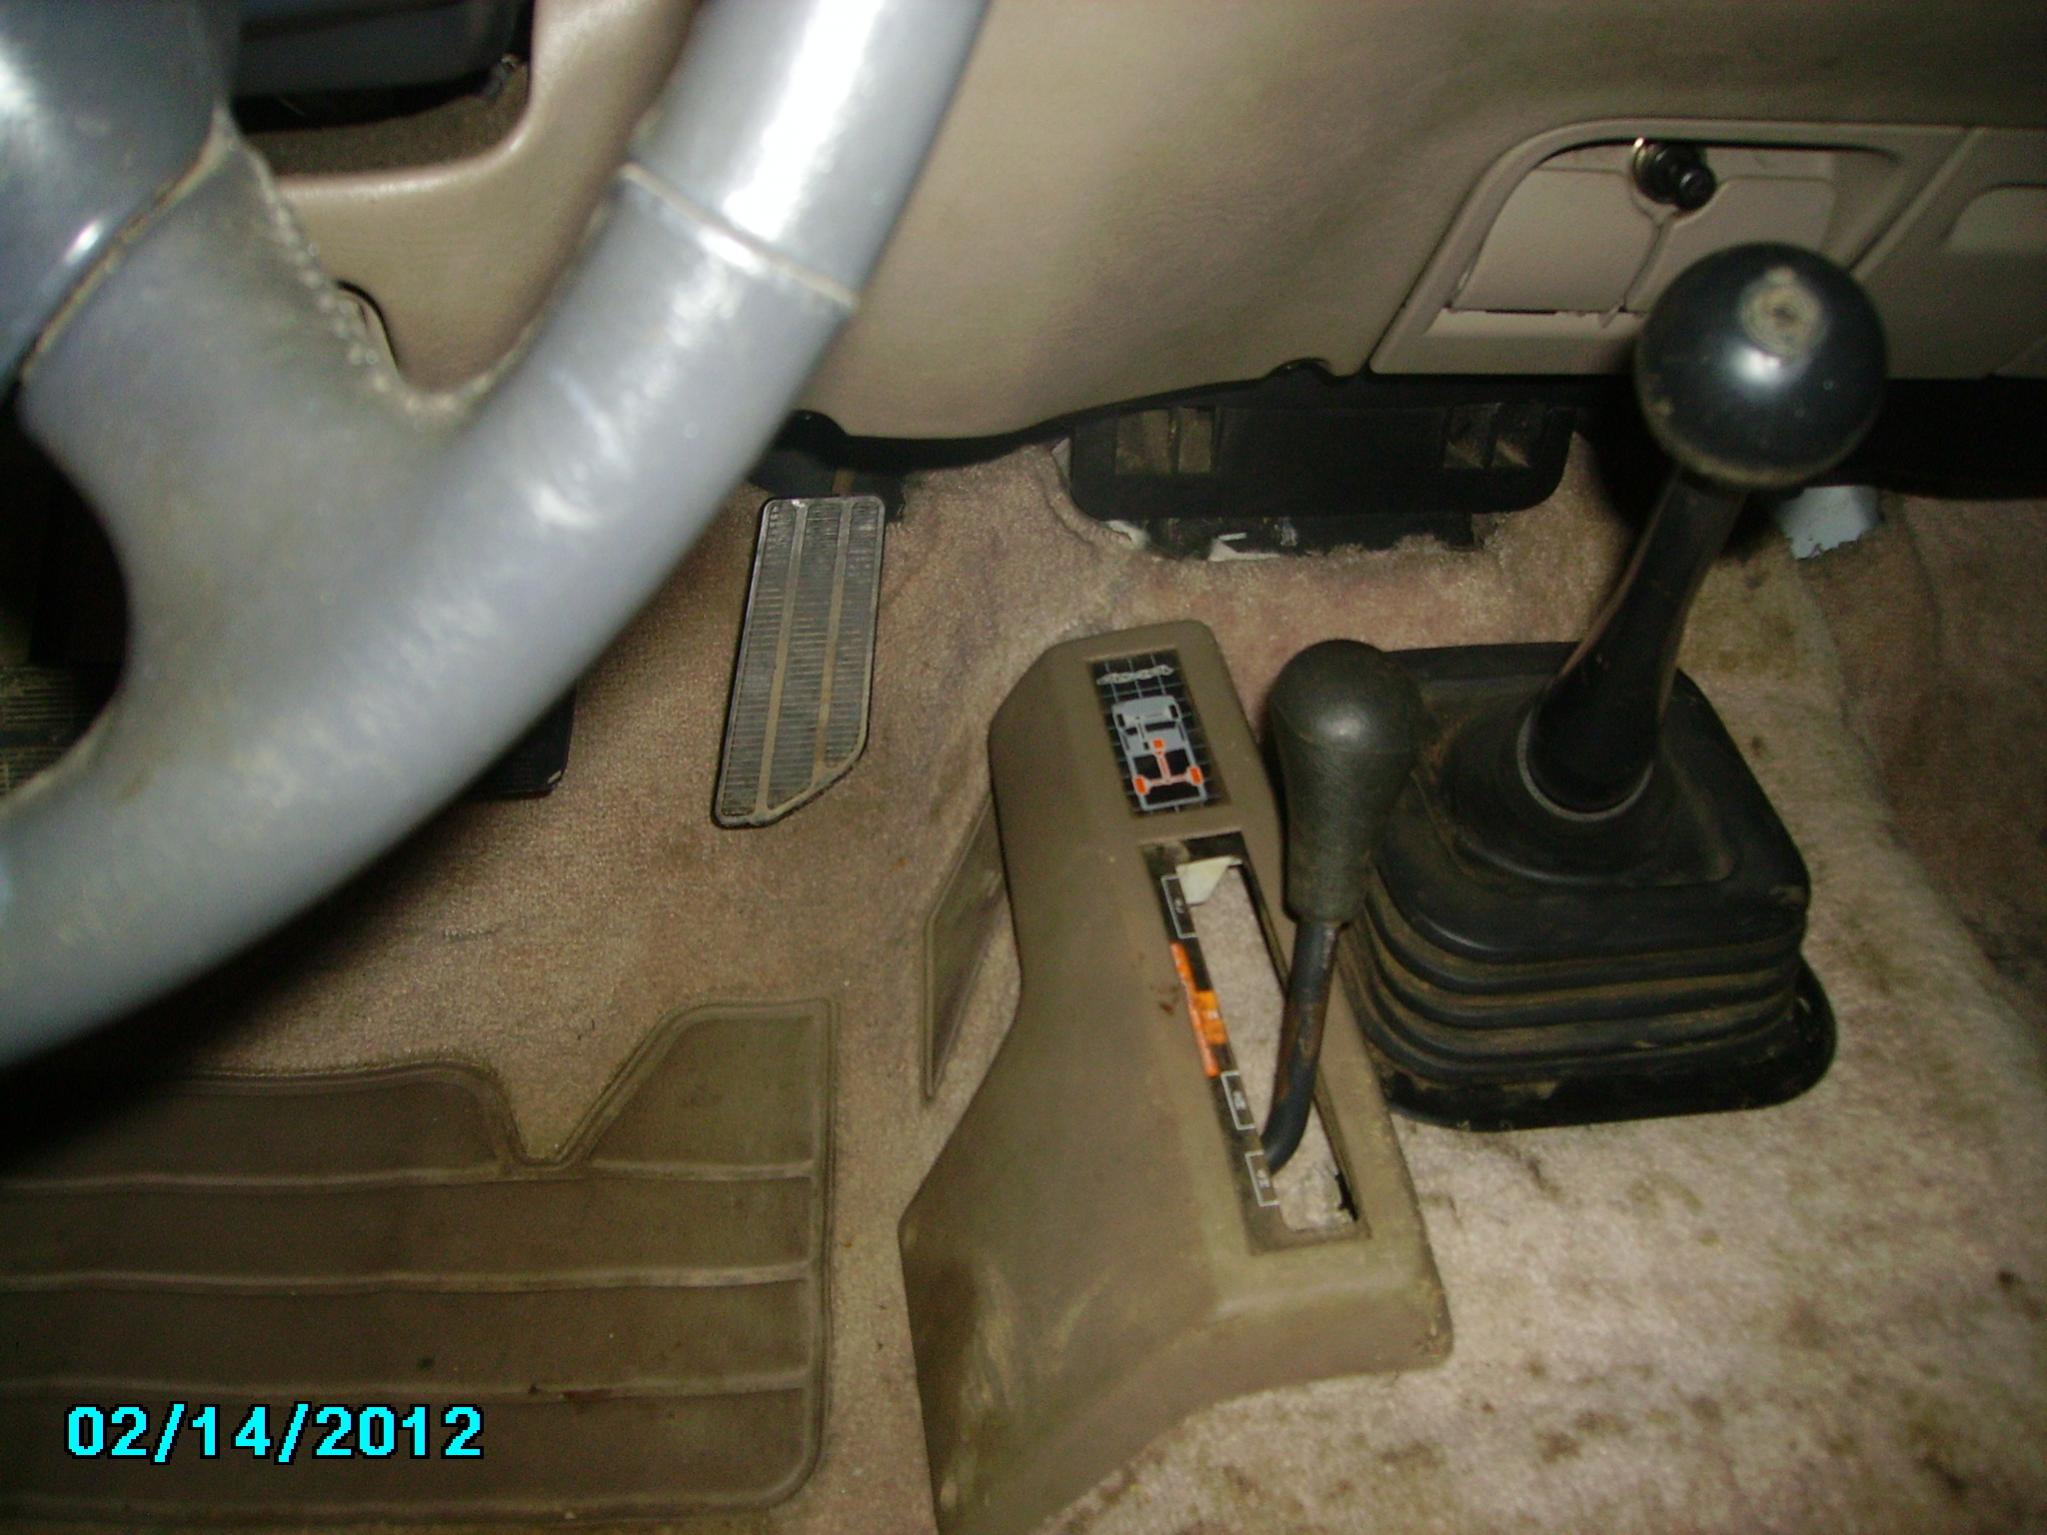 1995 k1500 manual transmission swap